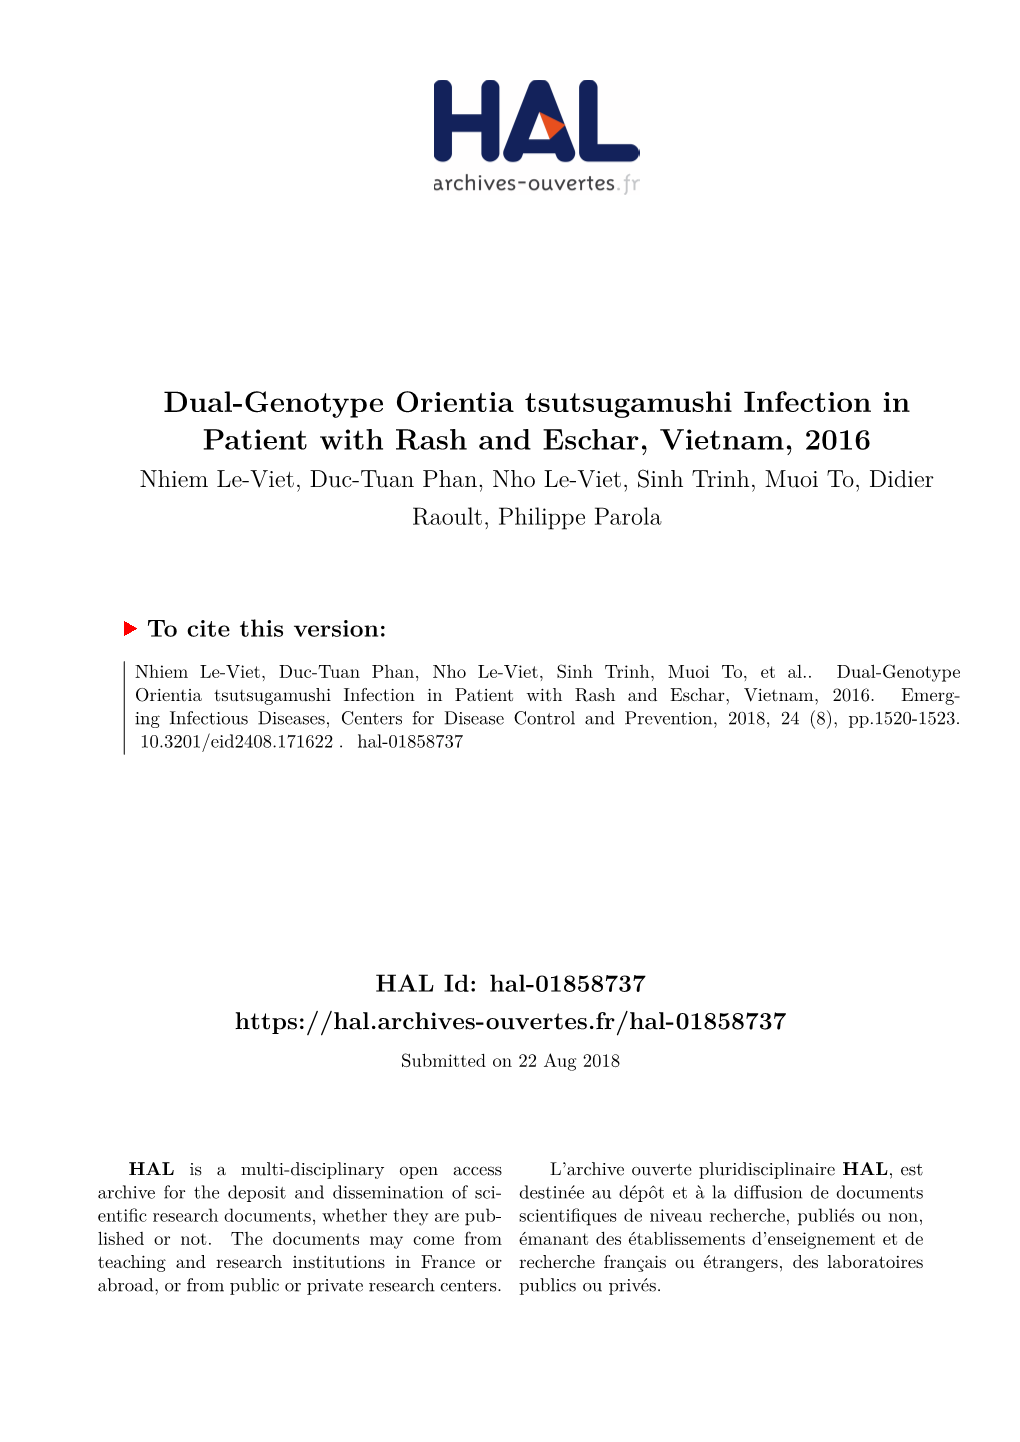 Dual-Genotype Orientia Tsutsugamushi Infection in Patient with Rash and Eschar, Vietnam, 2016